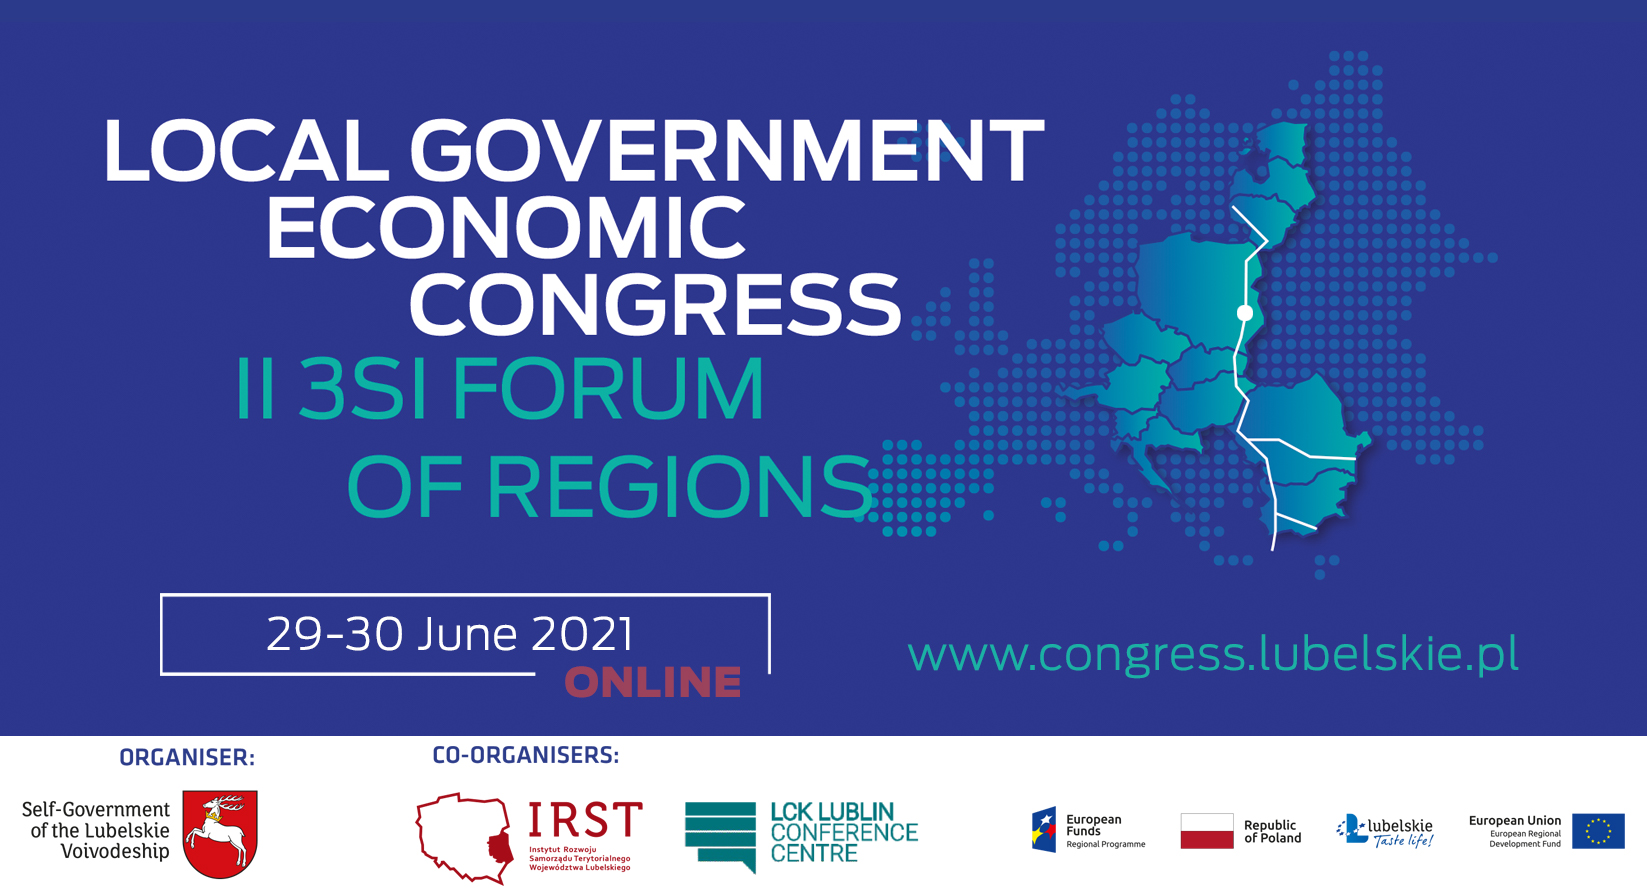 Local Government Economic Congress II Three Seas Forum of Regions